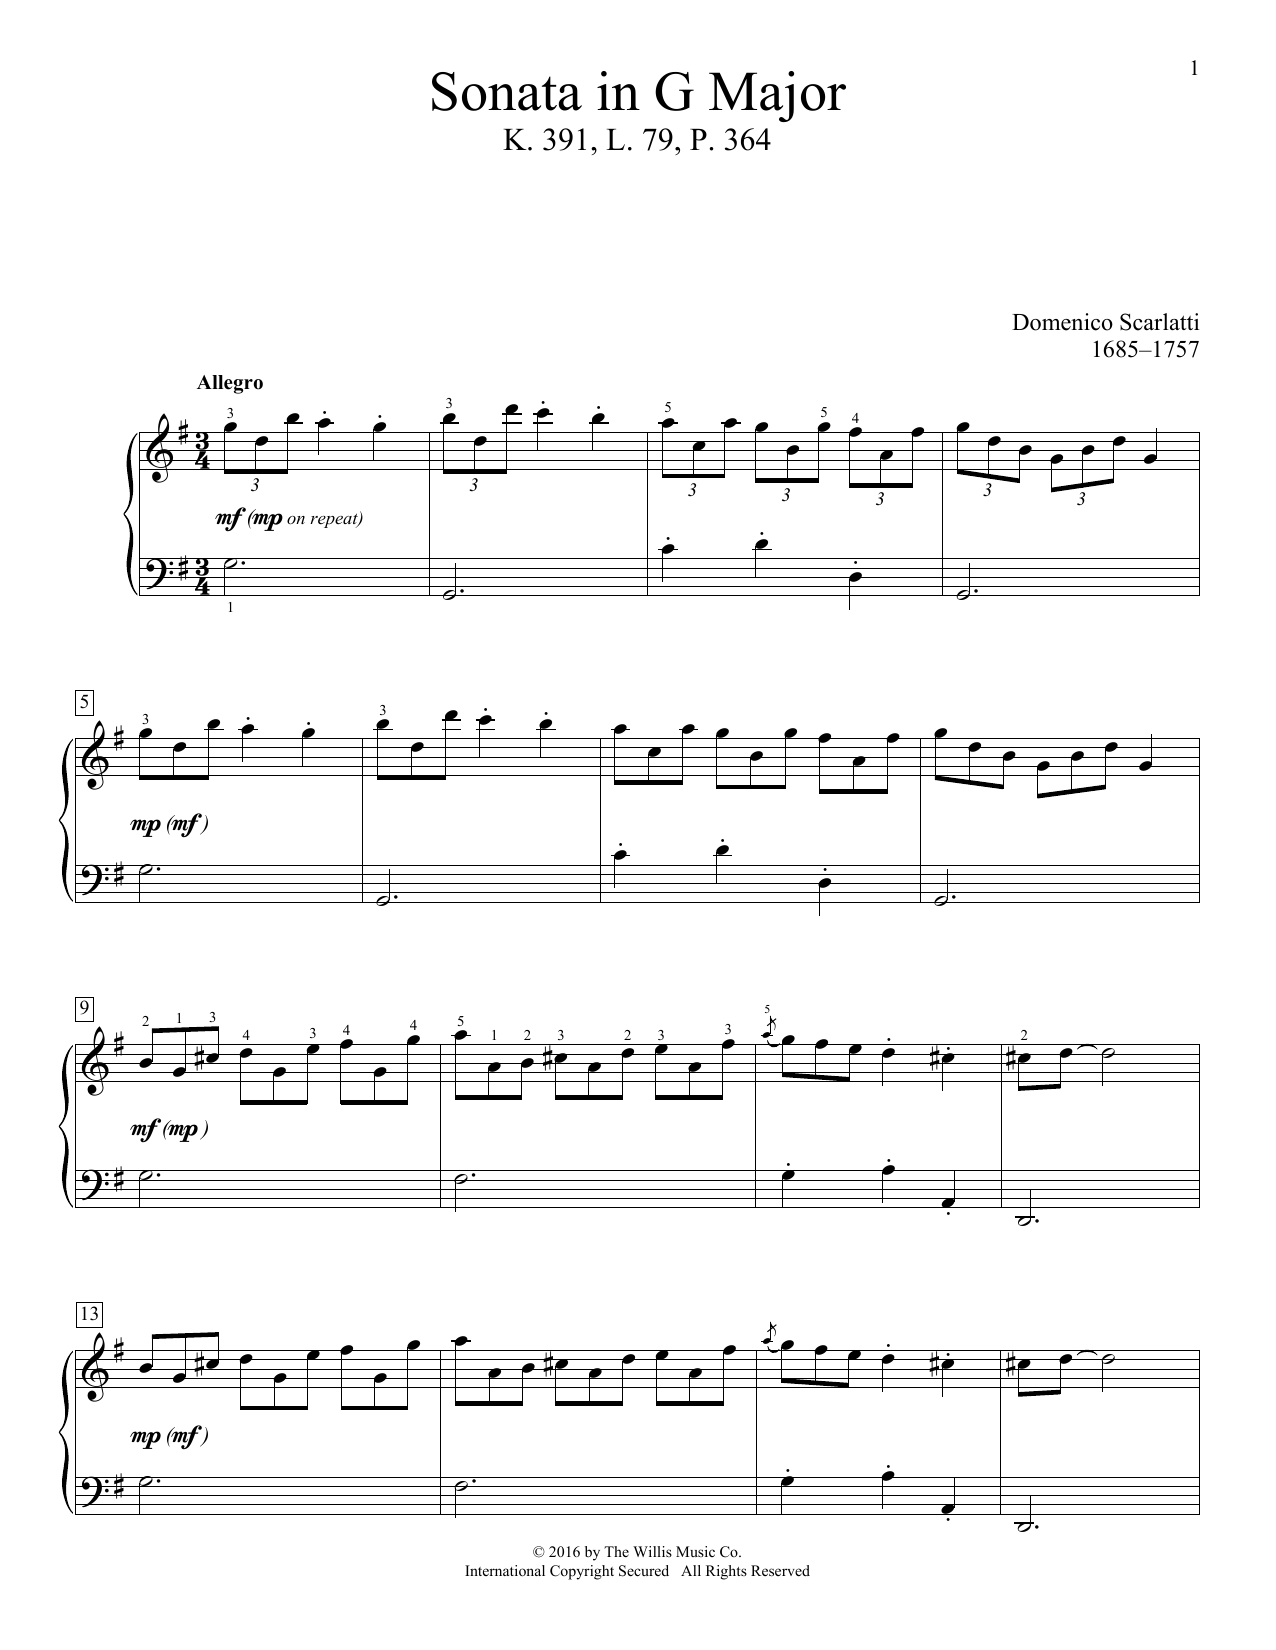 Domenico Scarlatti Sonata In G Major, K. 391, L. 79, P. 364 Sheet Music Notes & Chords for Educational Piano - Download or Print PDF